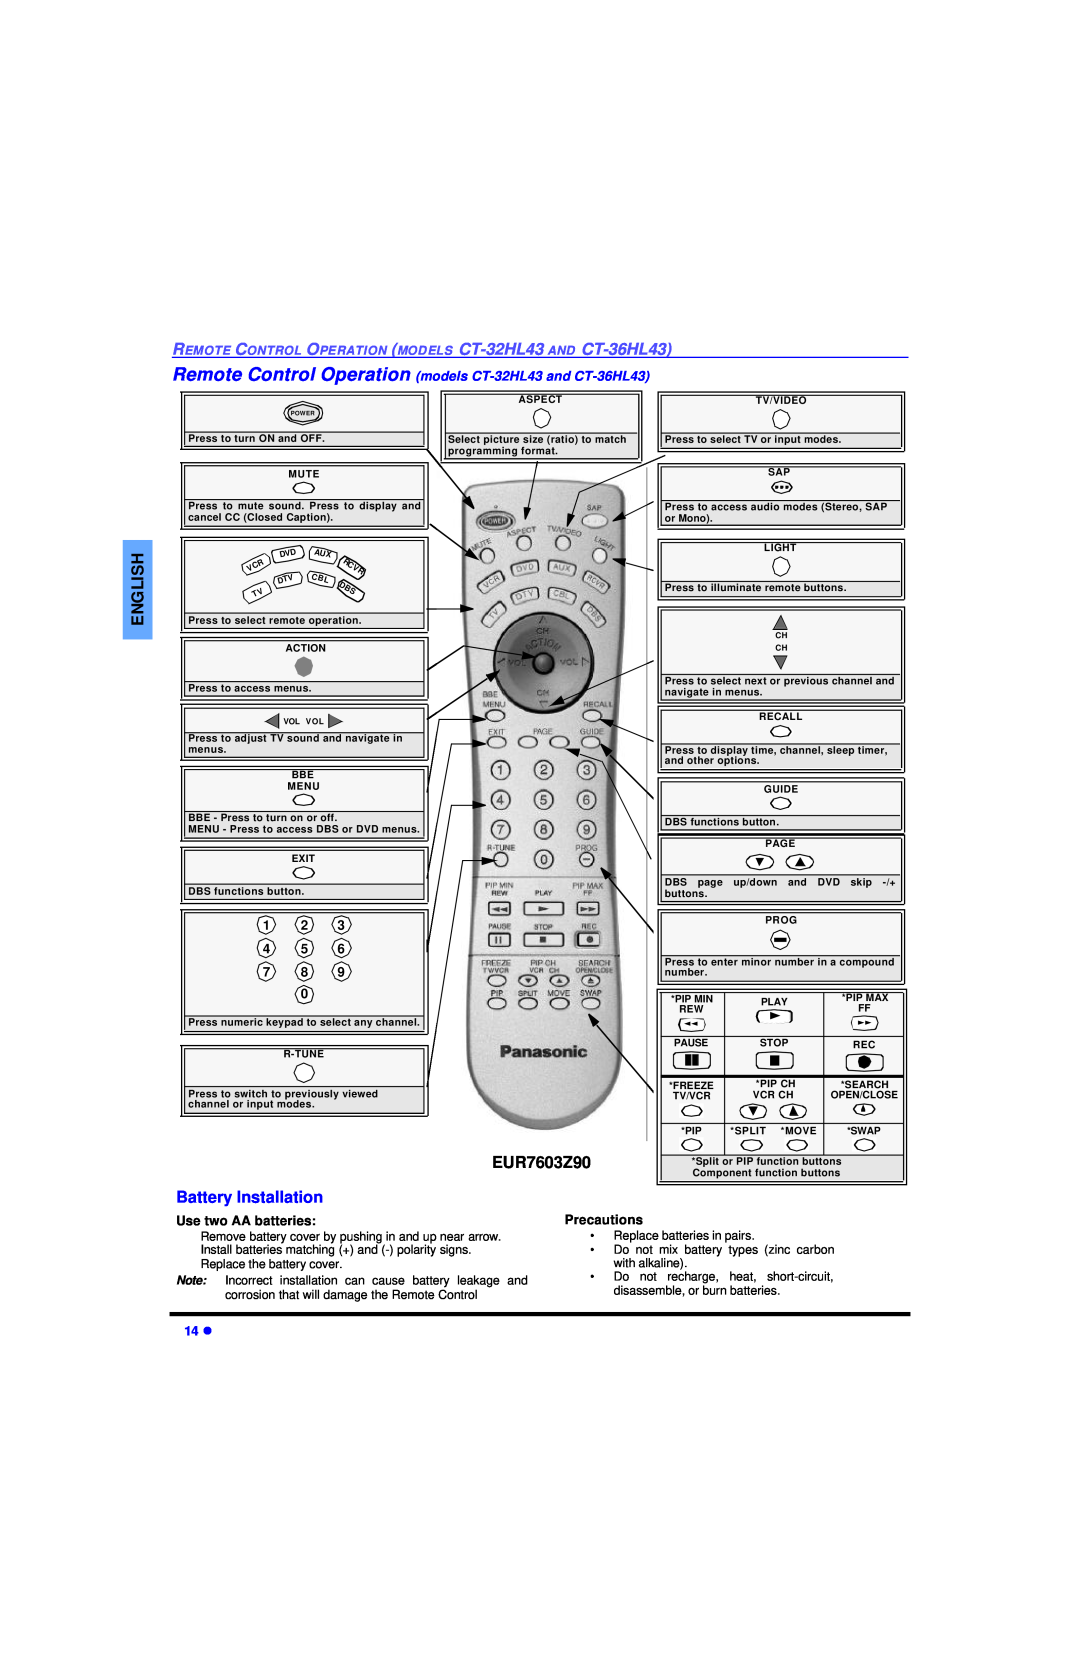 Panasonic CT 32HL43 manuel dutilisation Battery Installation, Remote Control Operation models CT-32HL43 and CT-36HL43 